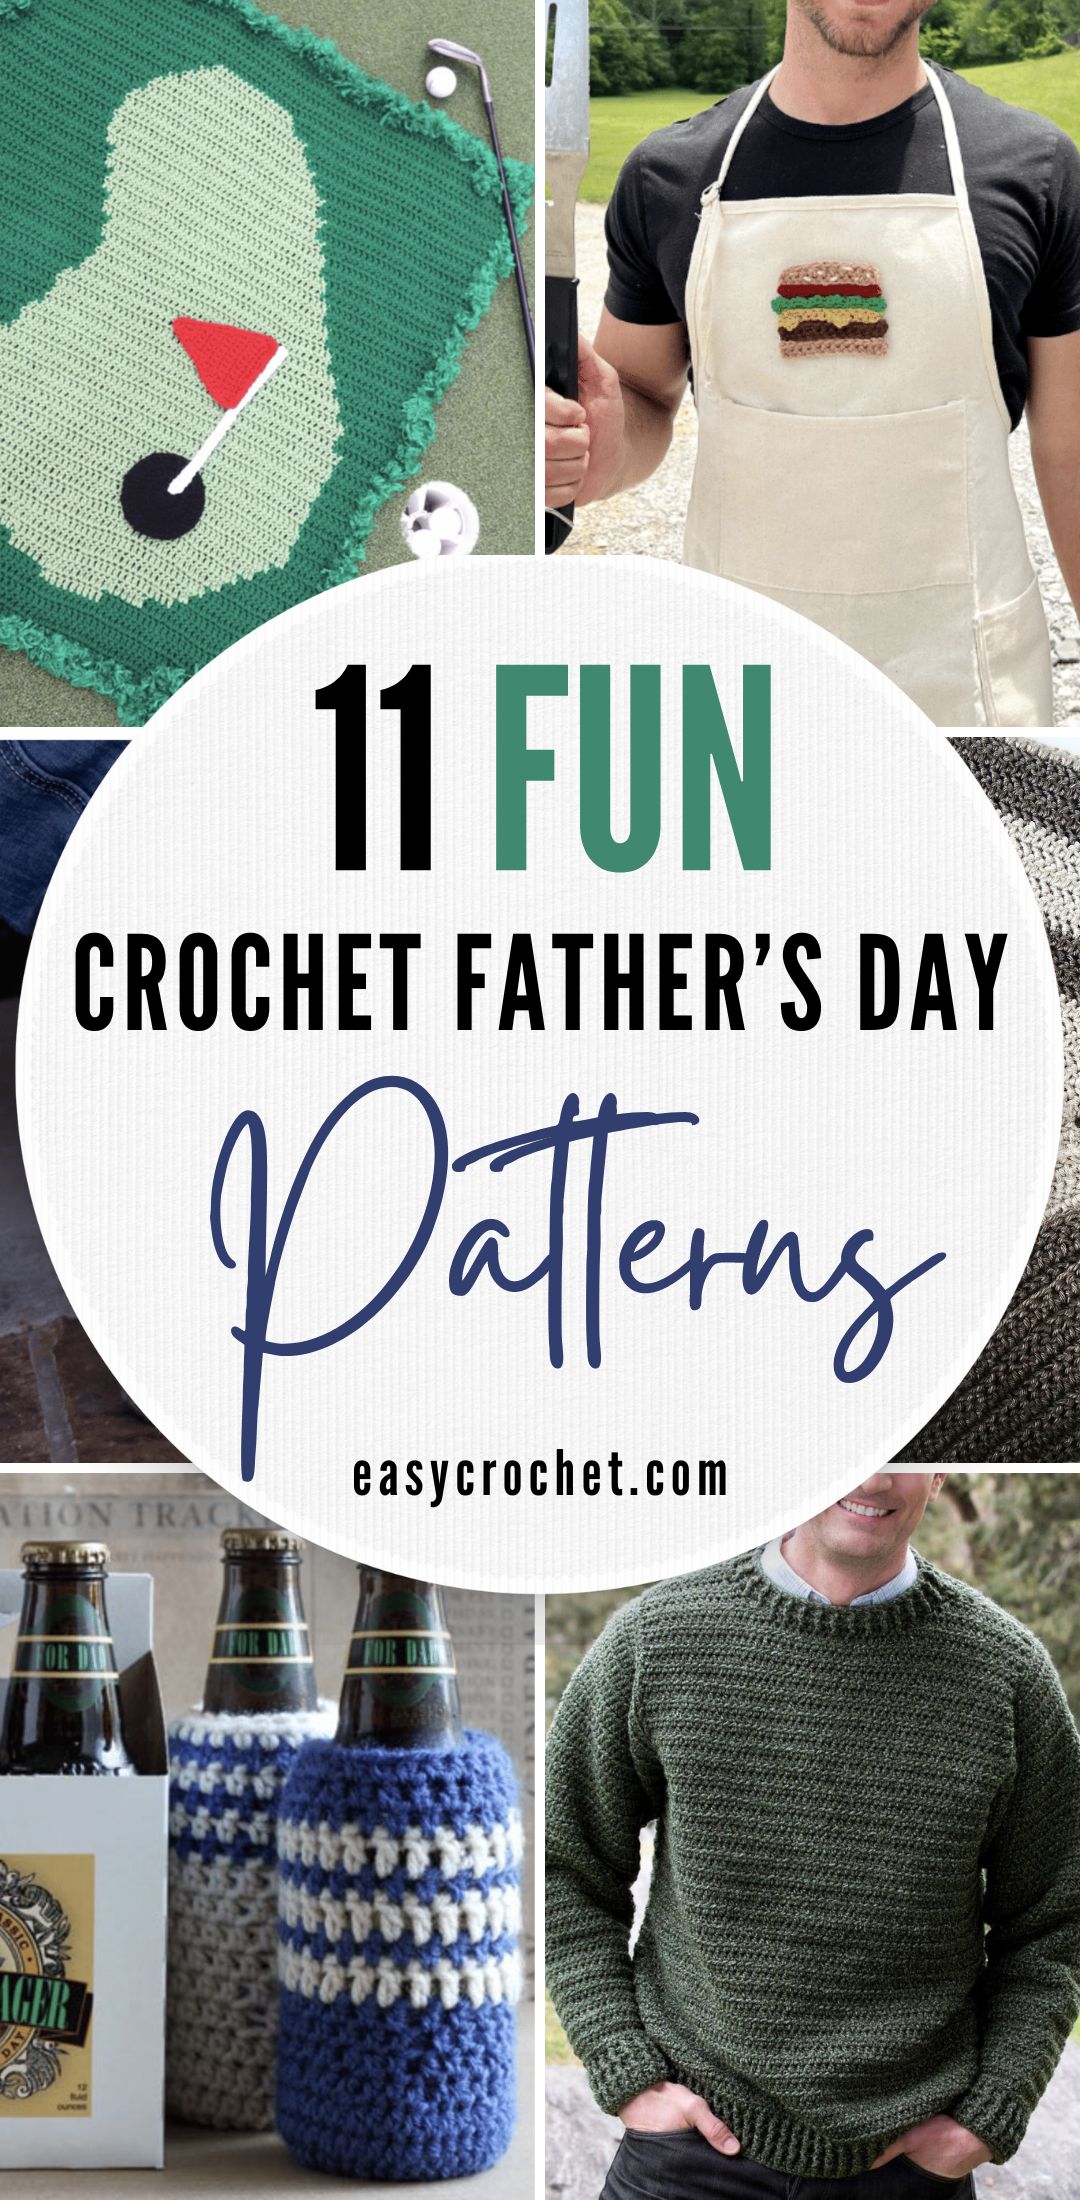 Cozy Men's Cardigan Patterns to Knit and Crochet - Craft Evangelist